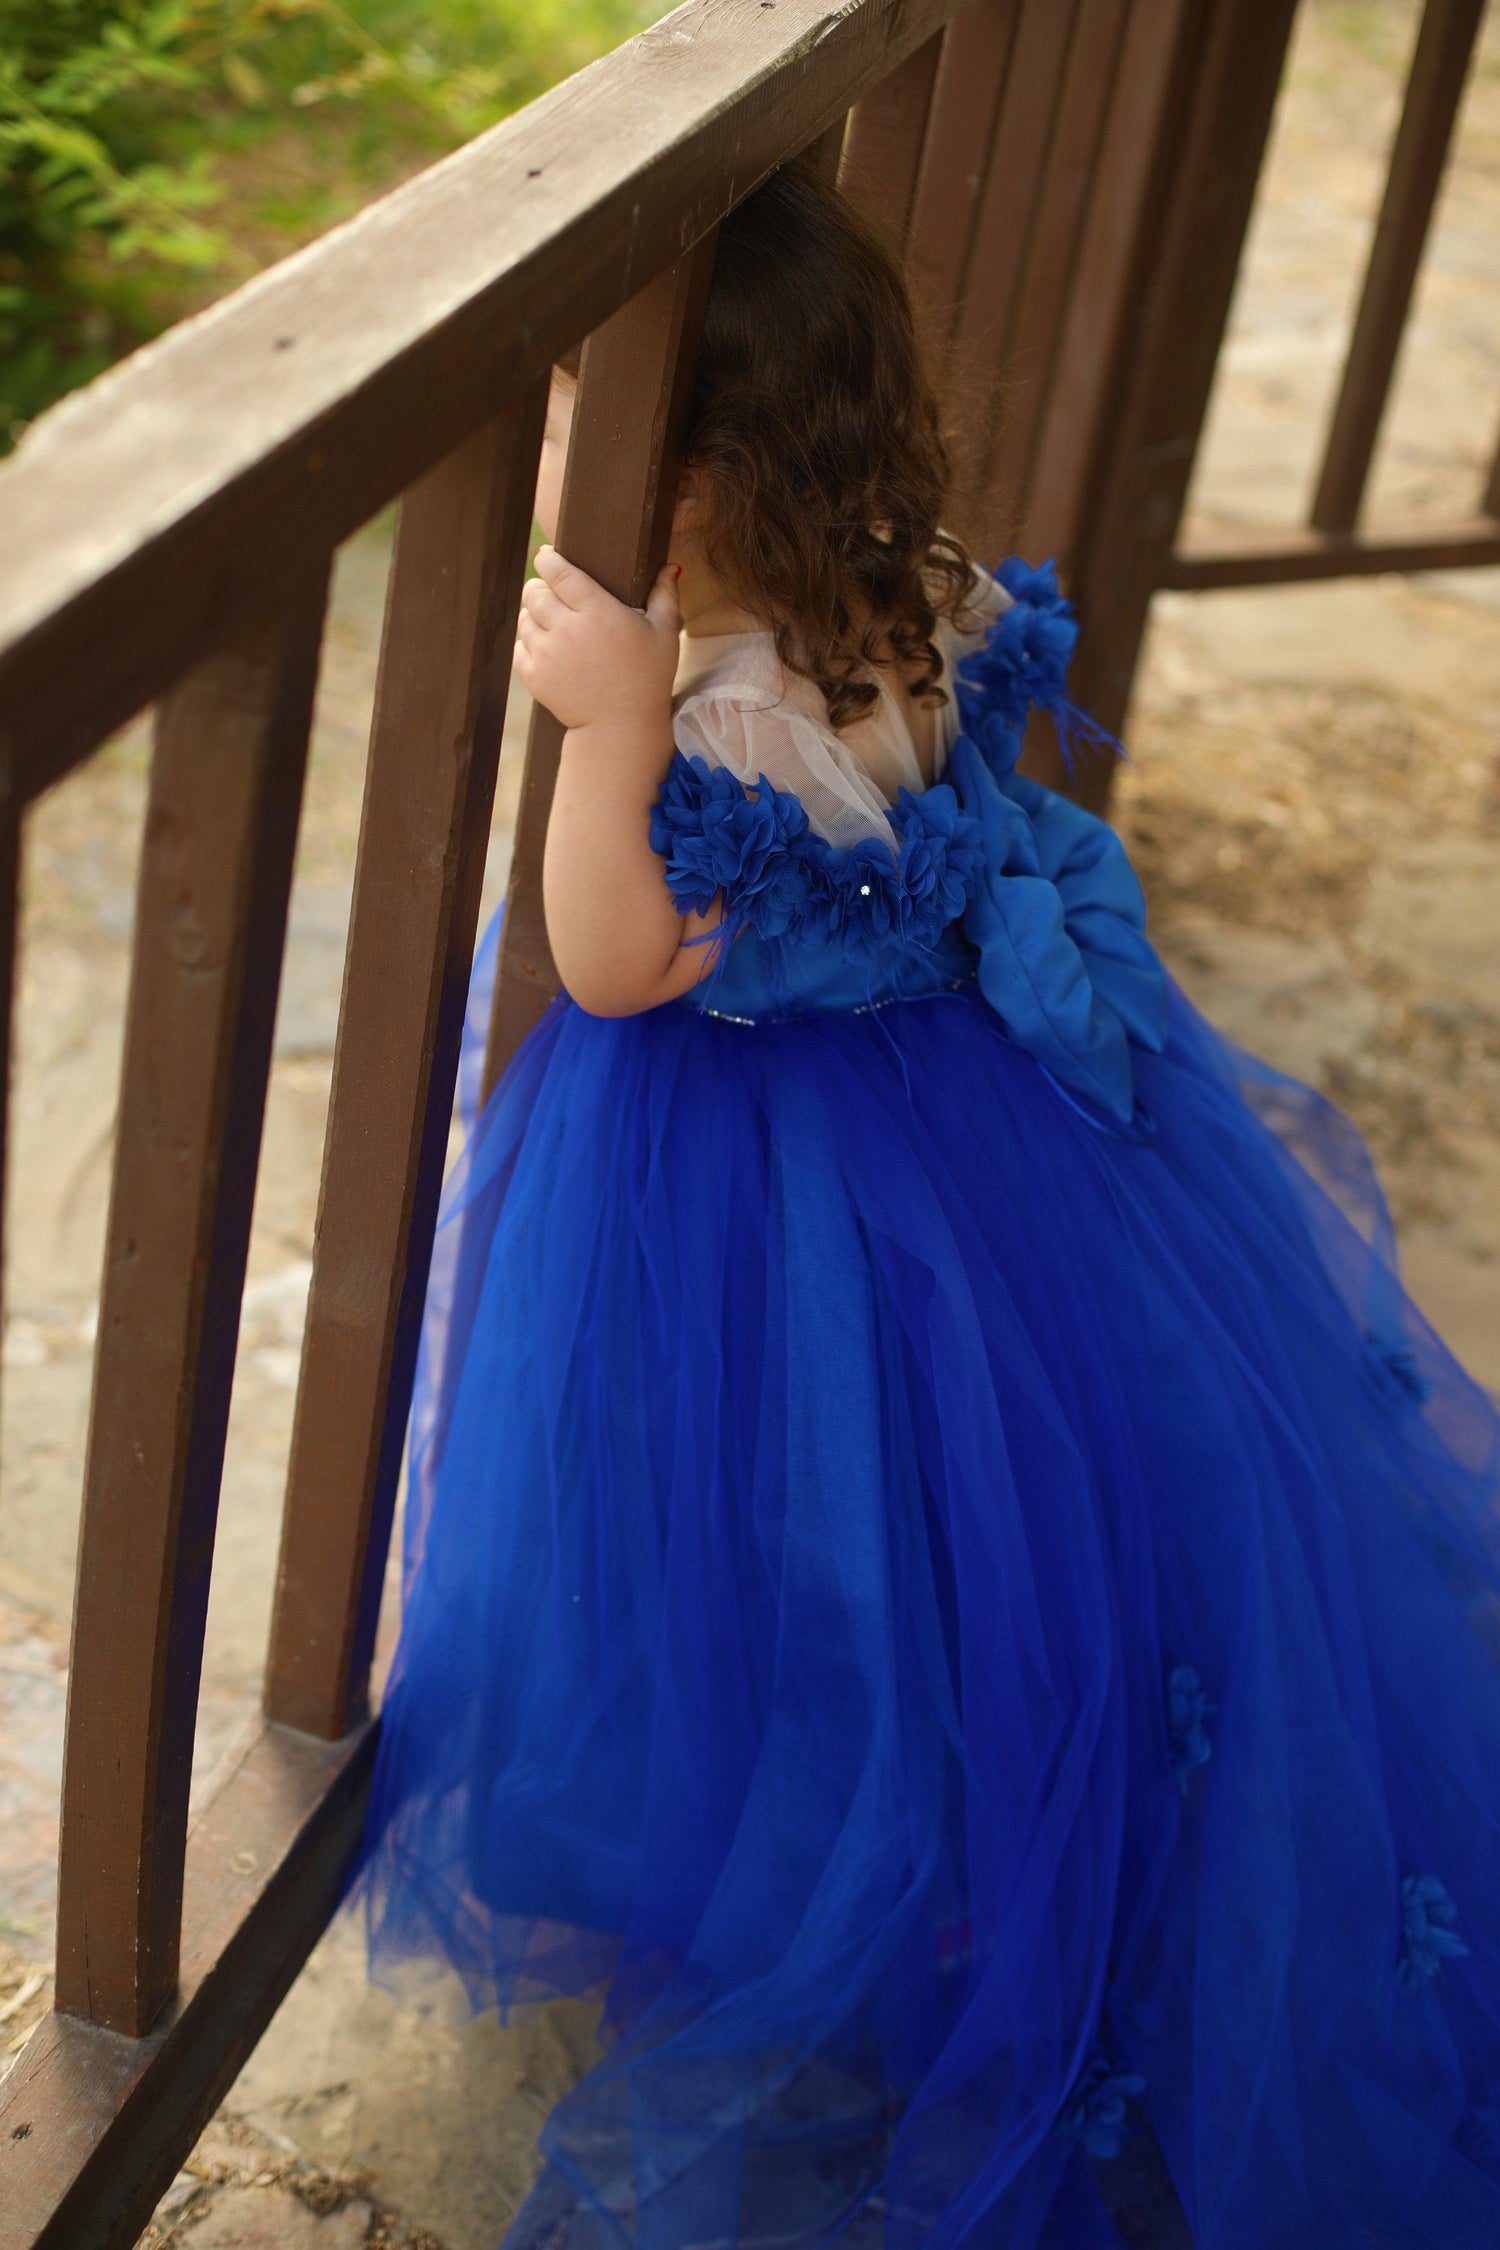 Flowergirl dress Blue - MyBabyByMerry 